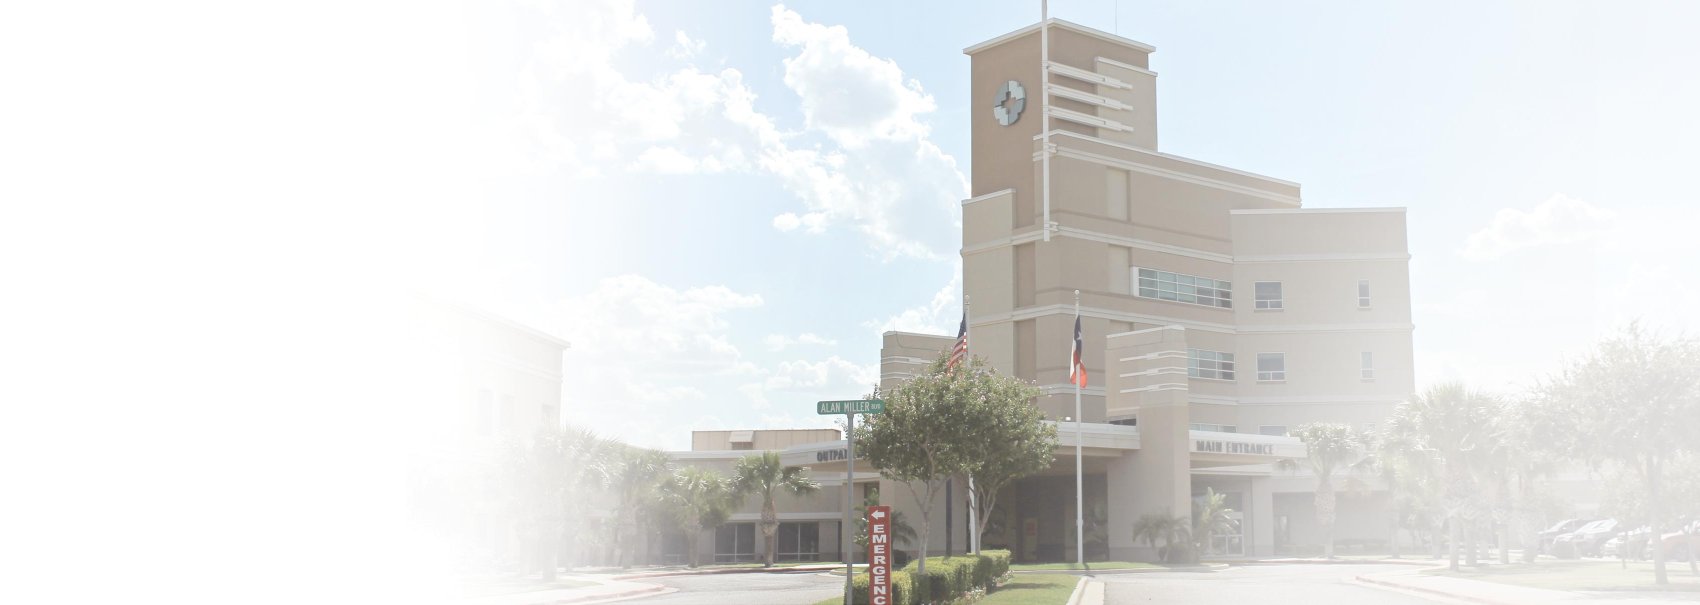 Doctores Hospital de Laredo